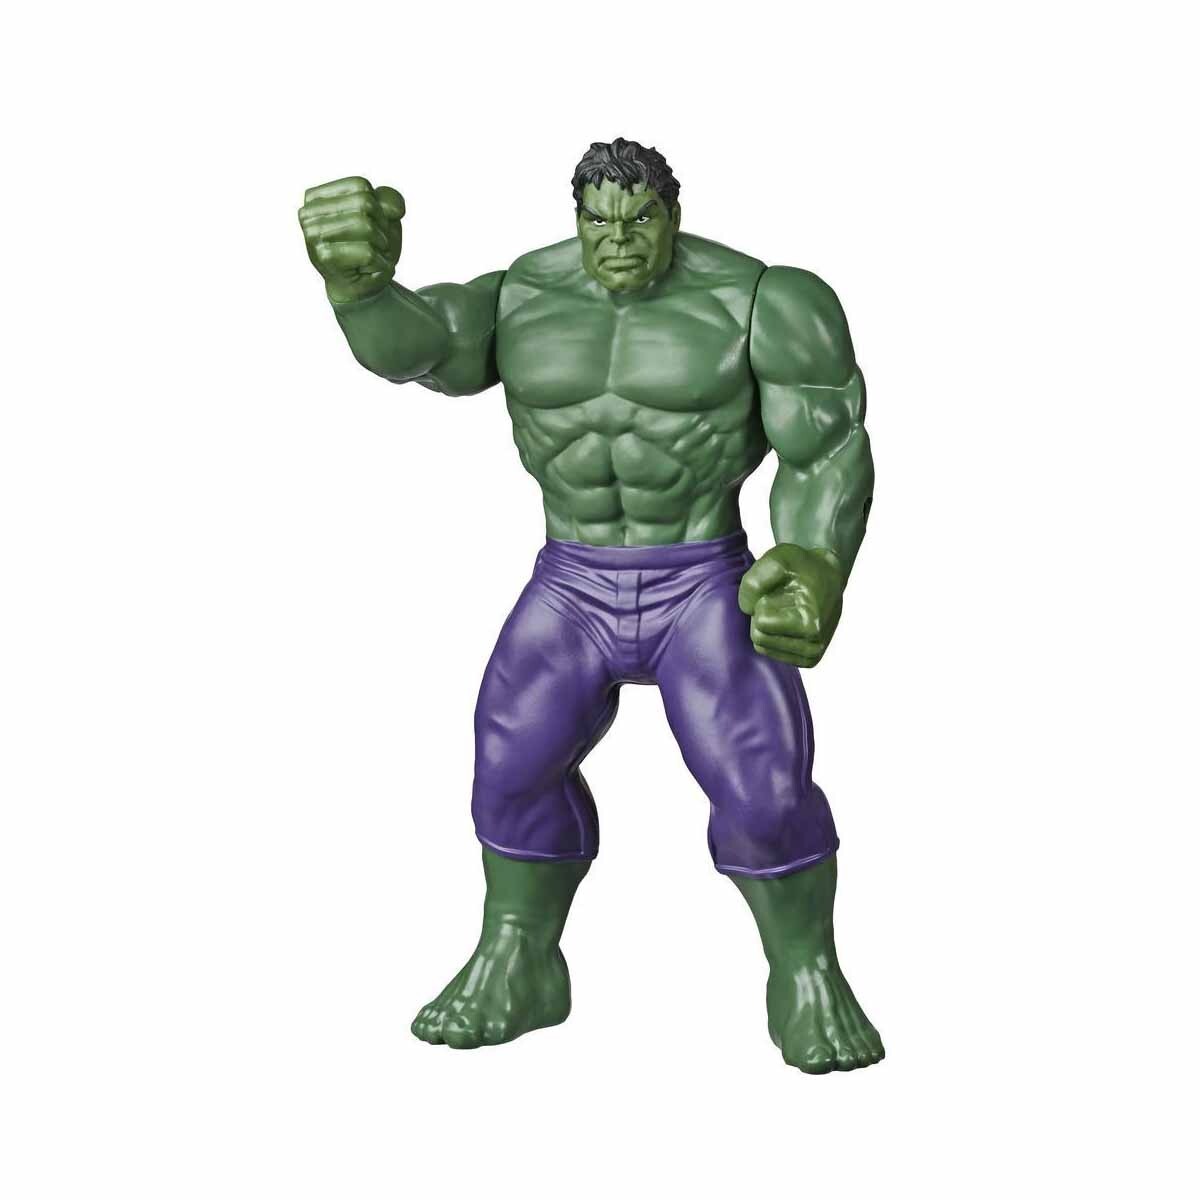 Marvel Olympus Hulk Fig-9.5in-E7825